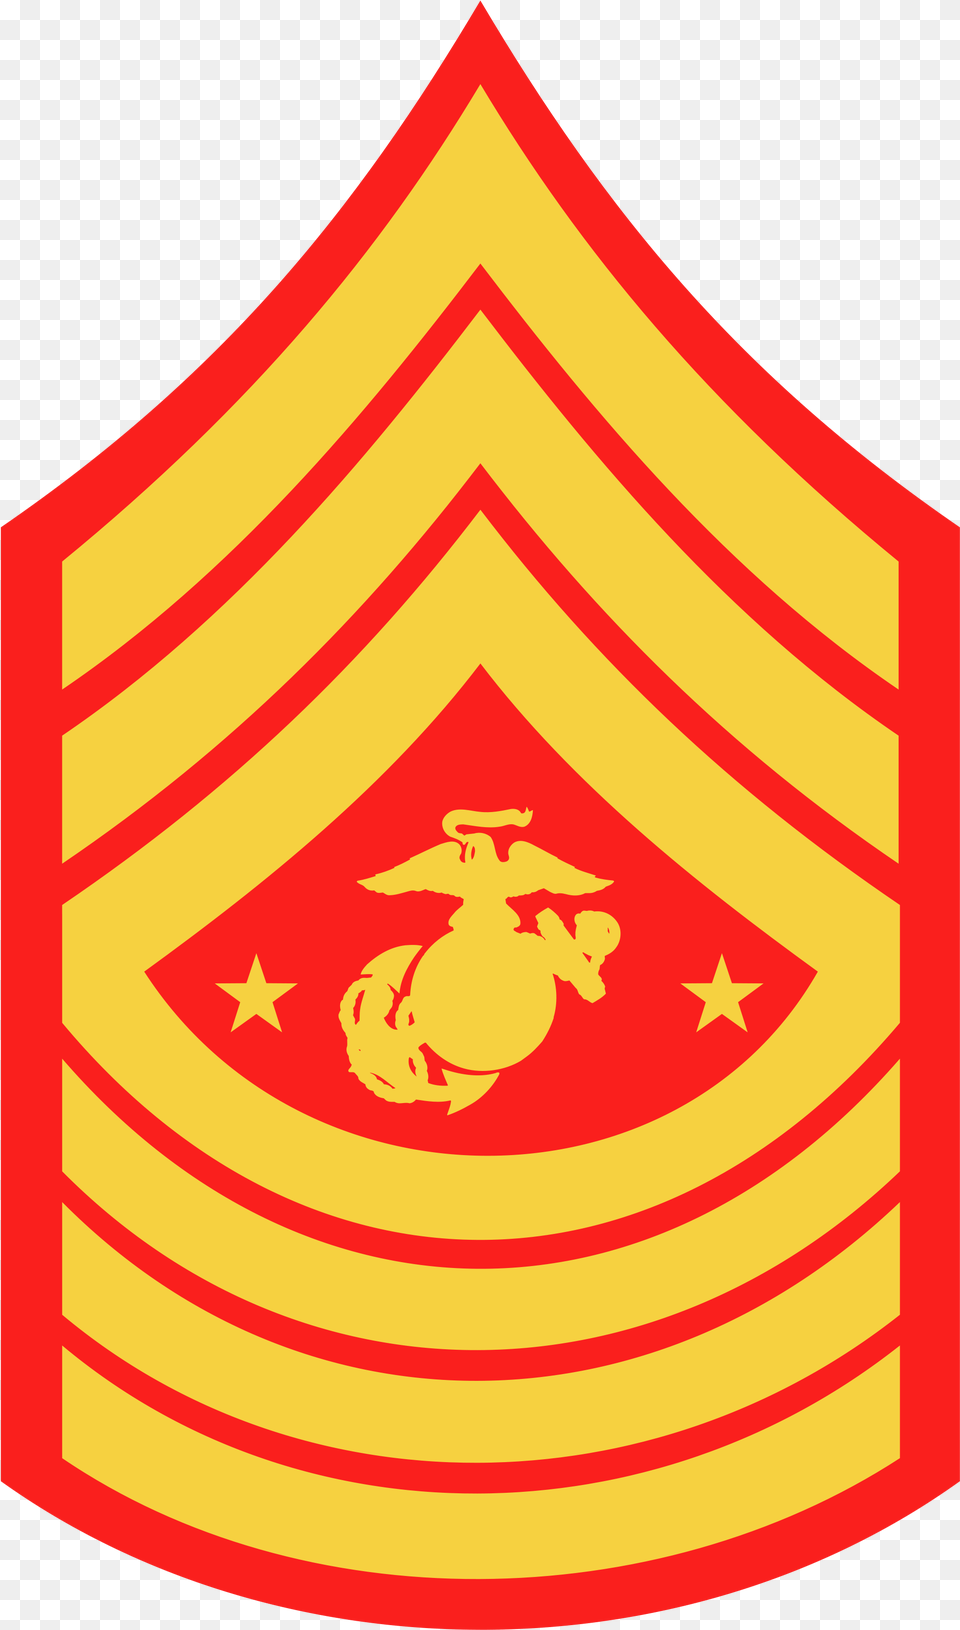 Usmc Sergeant Major Rank Insignia, Emblem, Symbol, Armor, Logo Png